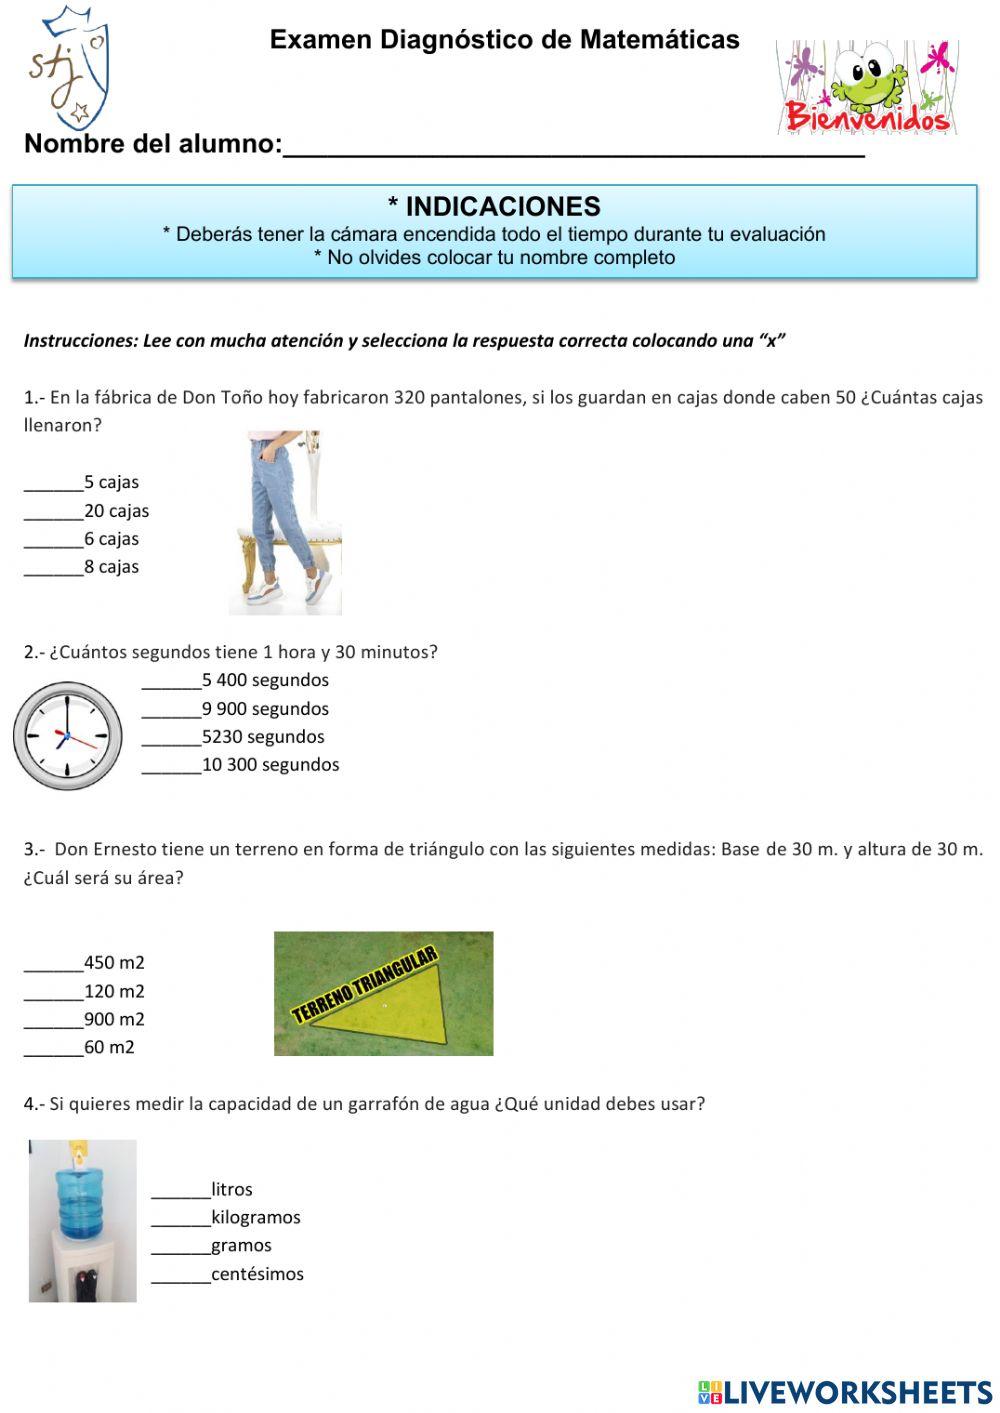 Diagnóstico Matemáticas online exercise for